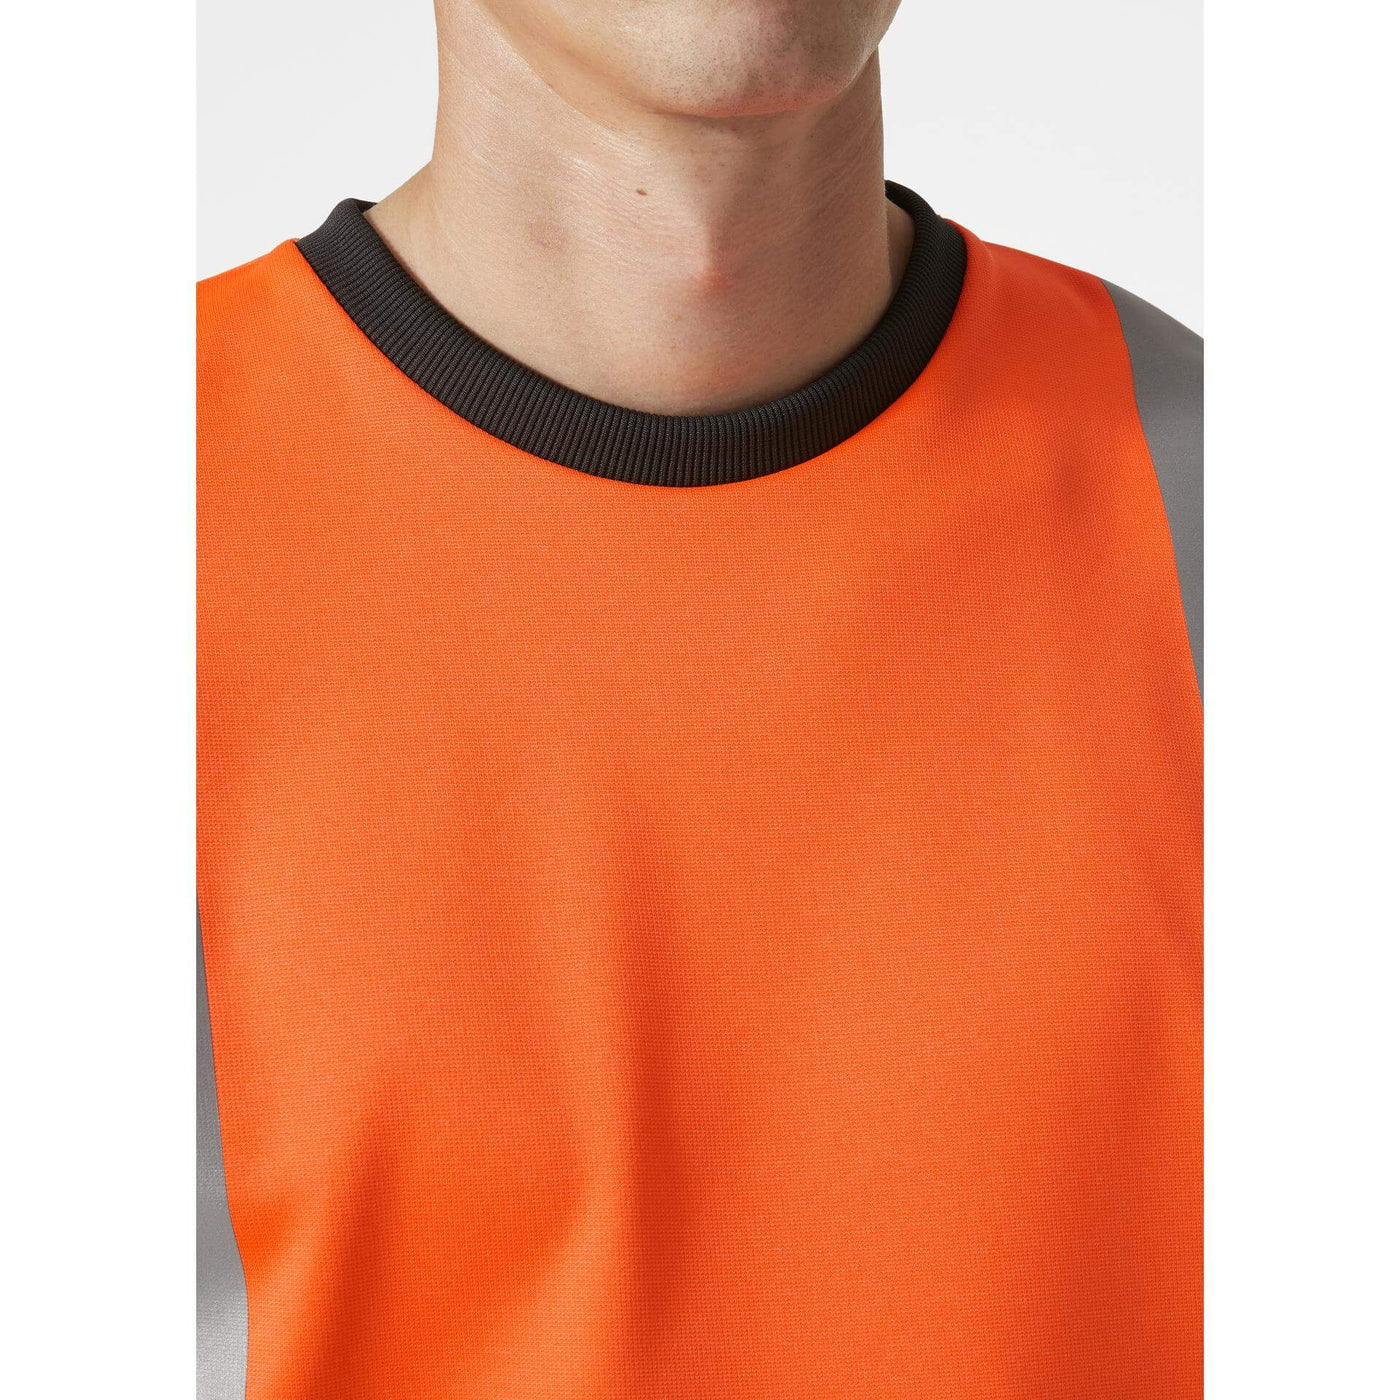 Helly Hansen Addvis Hi-Vis Sweatshirt Class 1 Orange/Ebony Feature 2#colour_orange-ebony